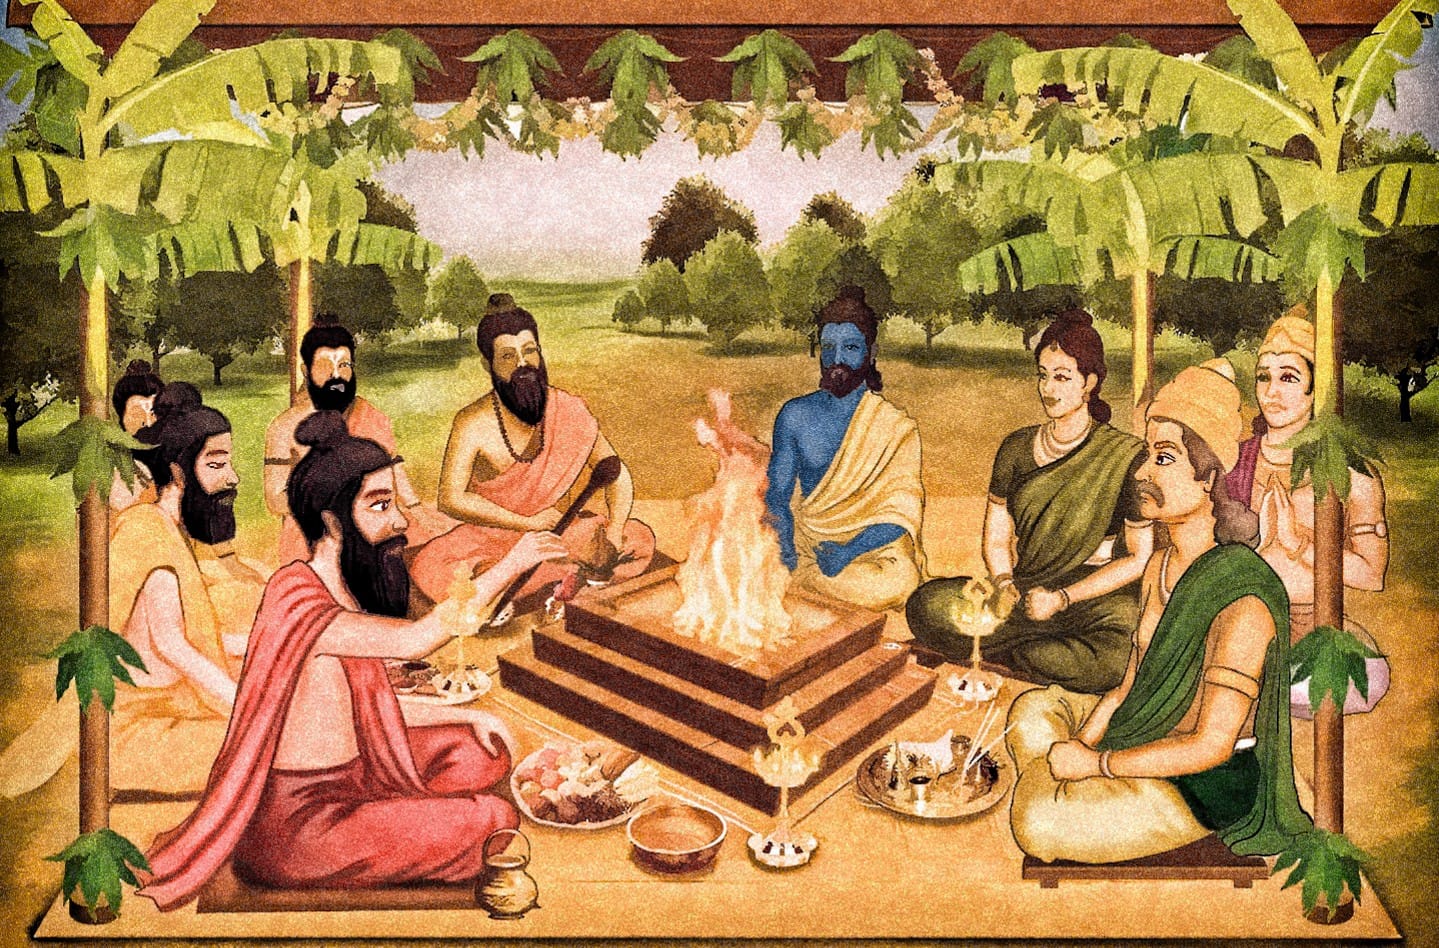 The Vedic Period